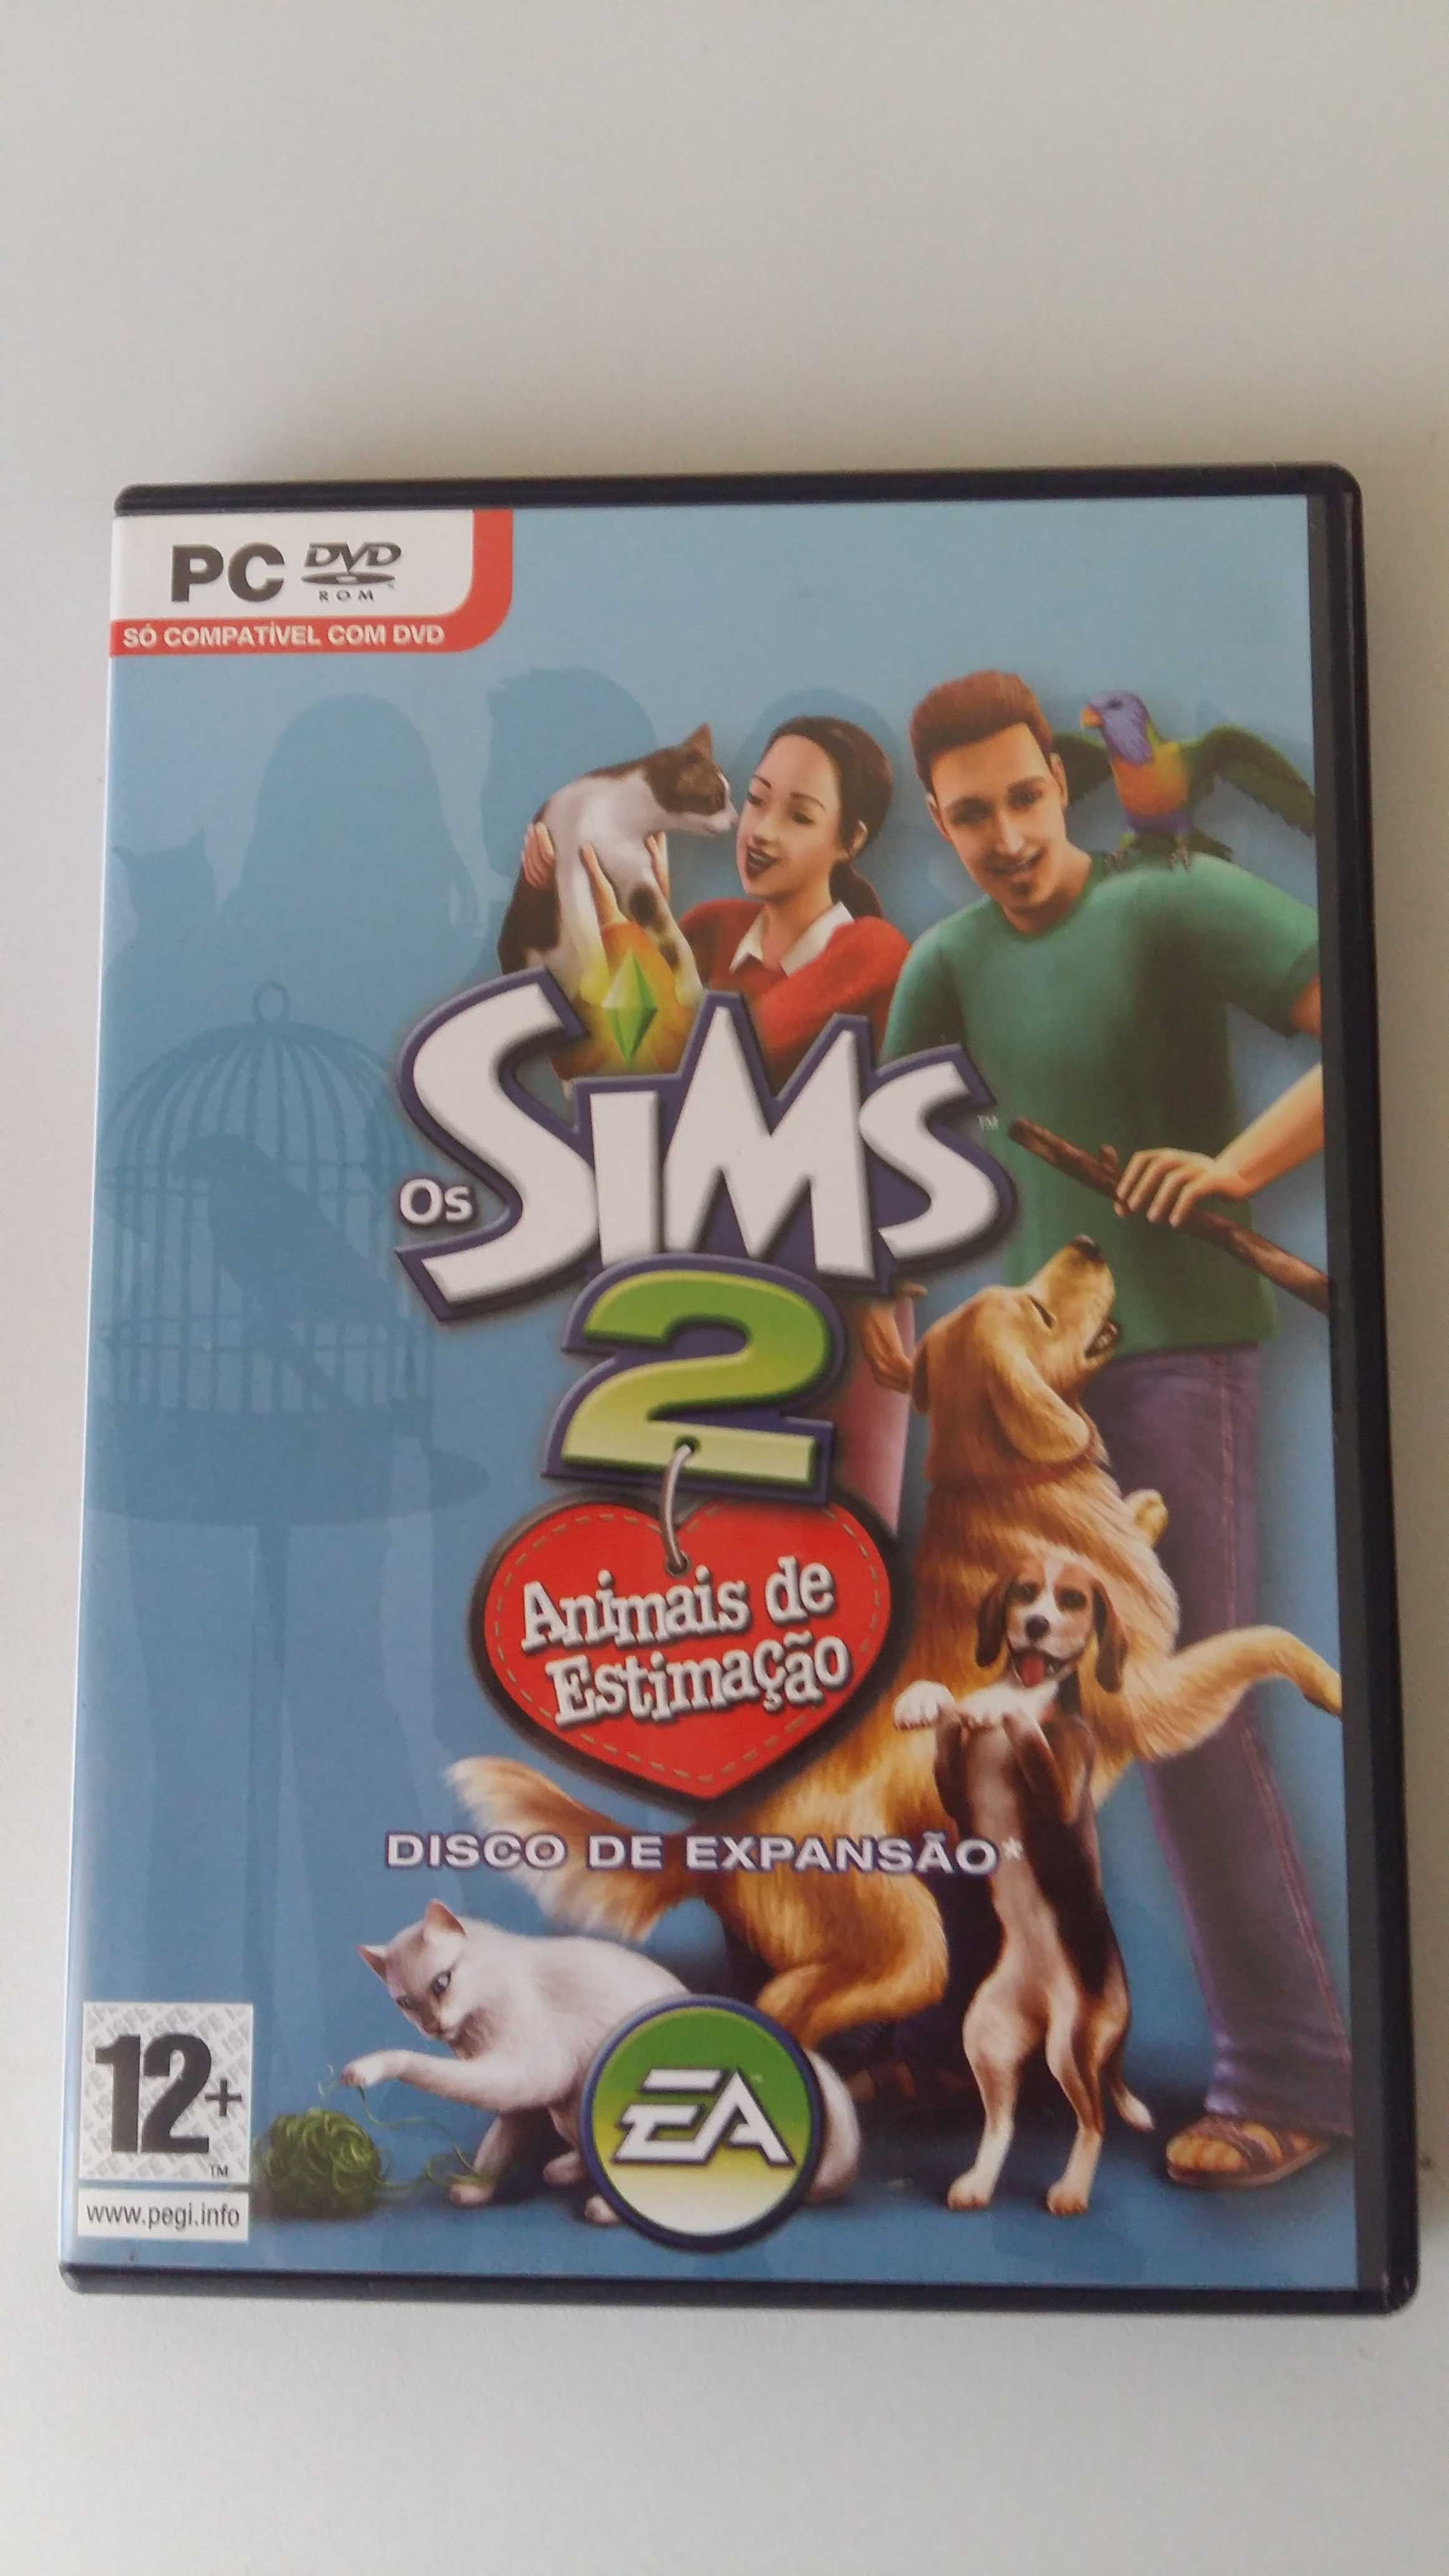 The Sims 2 + expansões